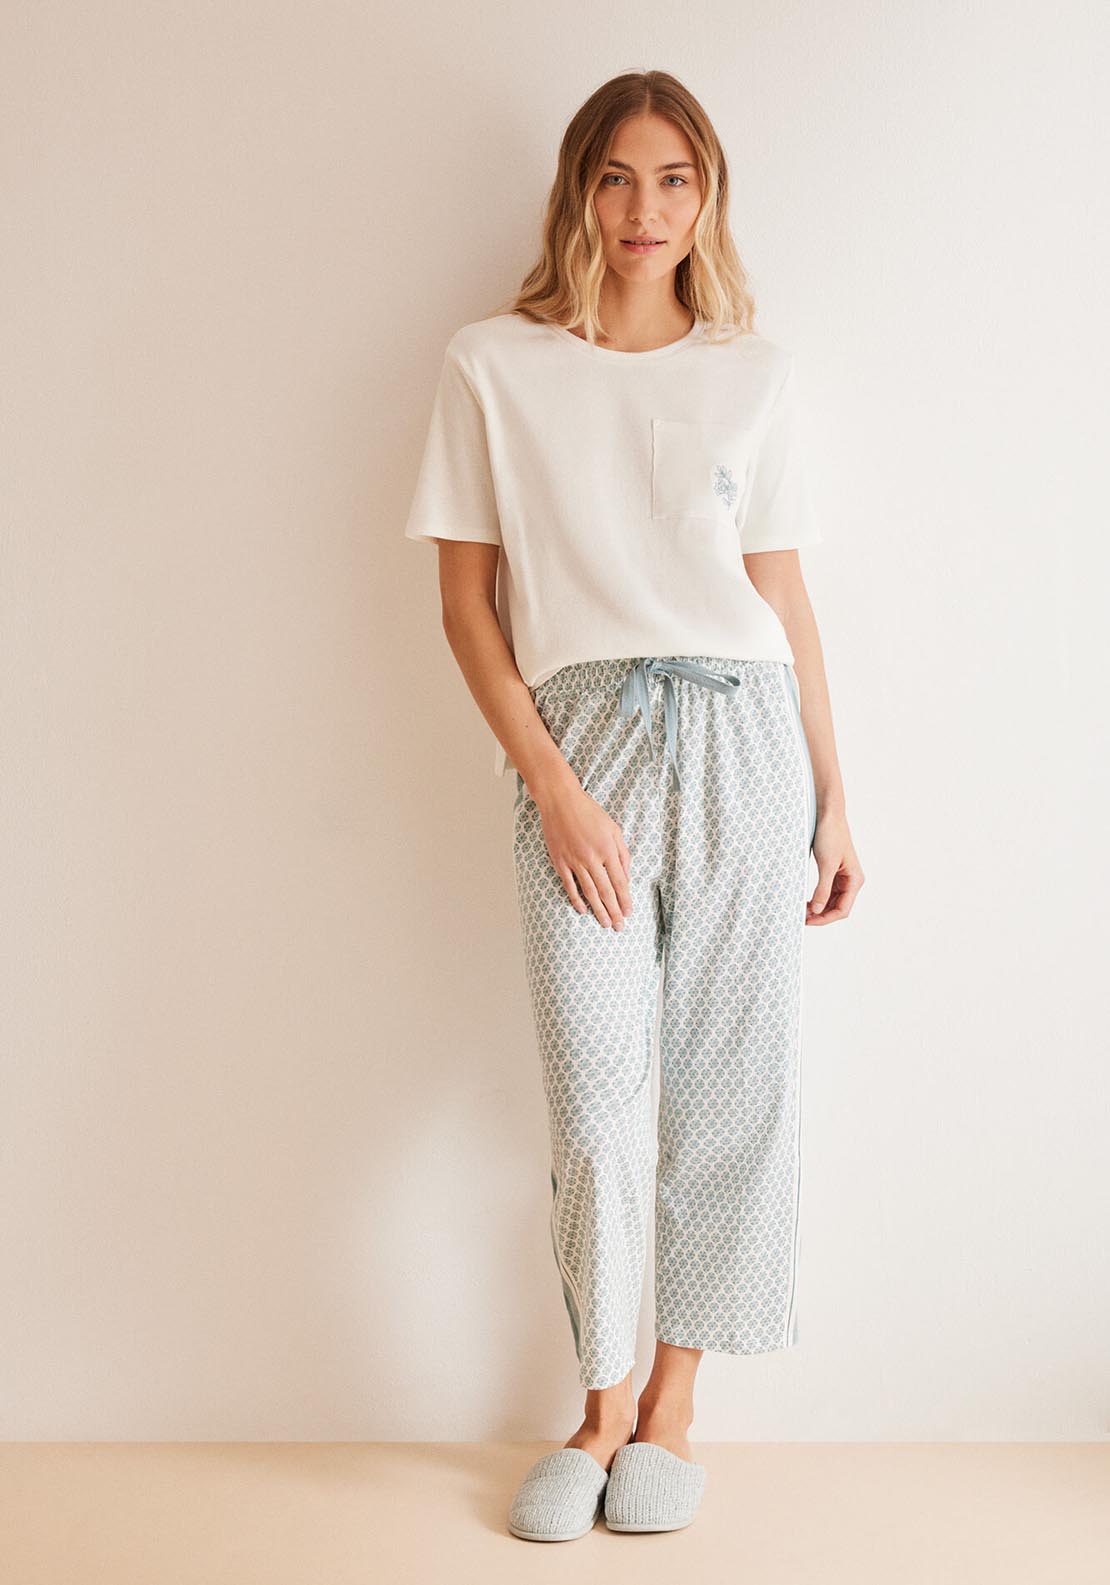 Womens Secret 100% cotton Capri pyjamas with a geometric print - Ivory 1 Shaws Department Stores